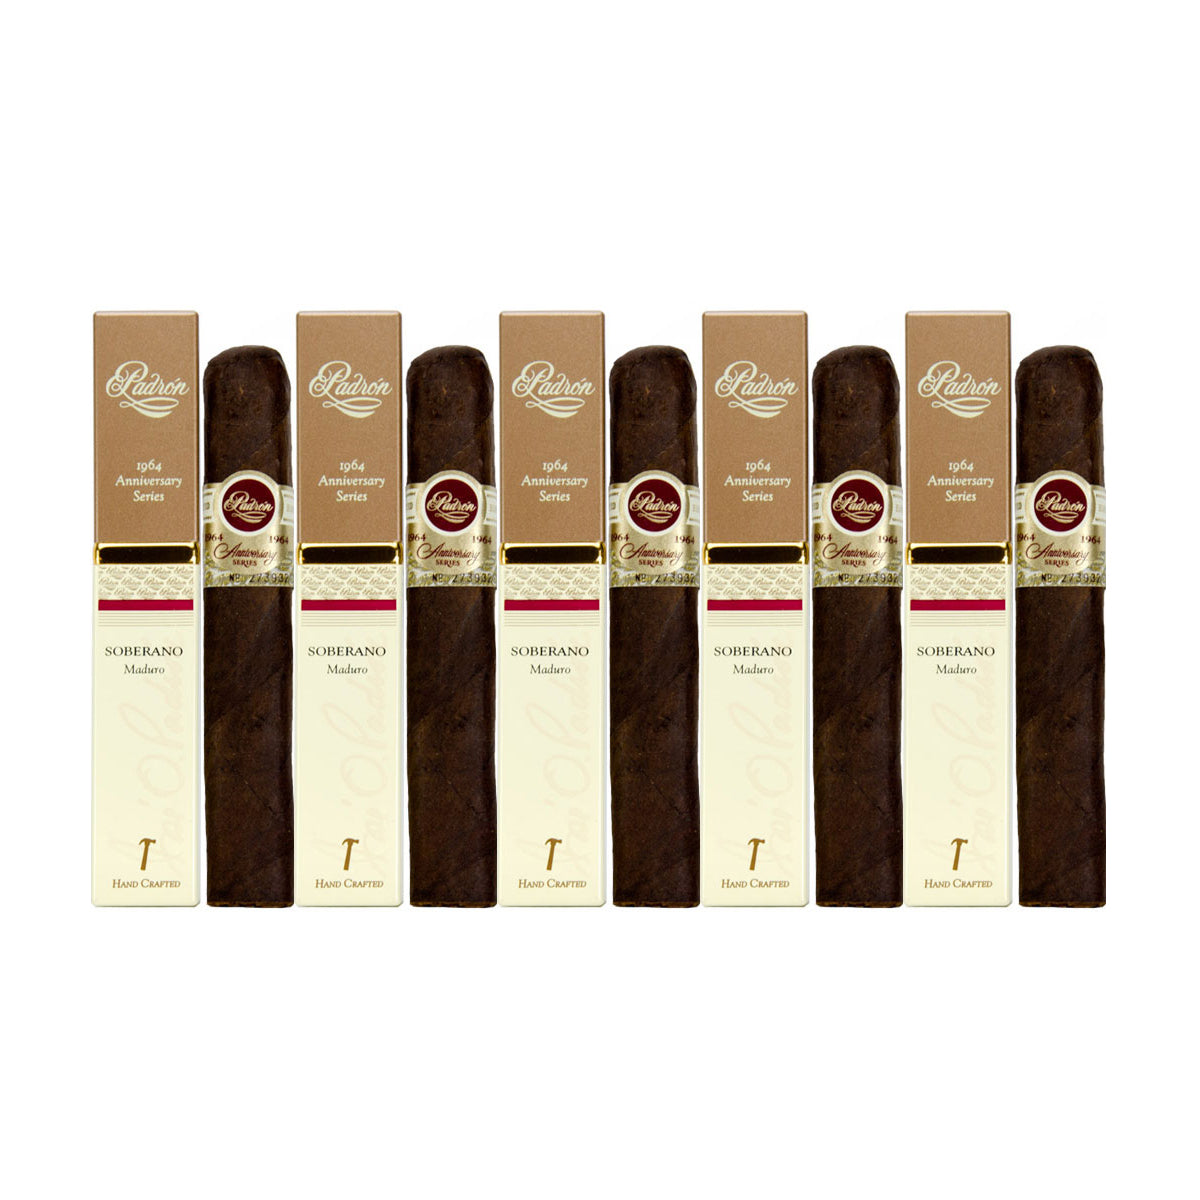 Padron 1964 Anniversary Series Soberano Maduro 5 x 52 Robusto Tubo Cigars 5 Pack